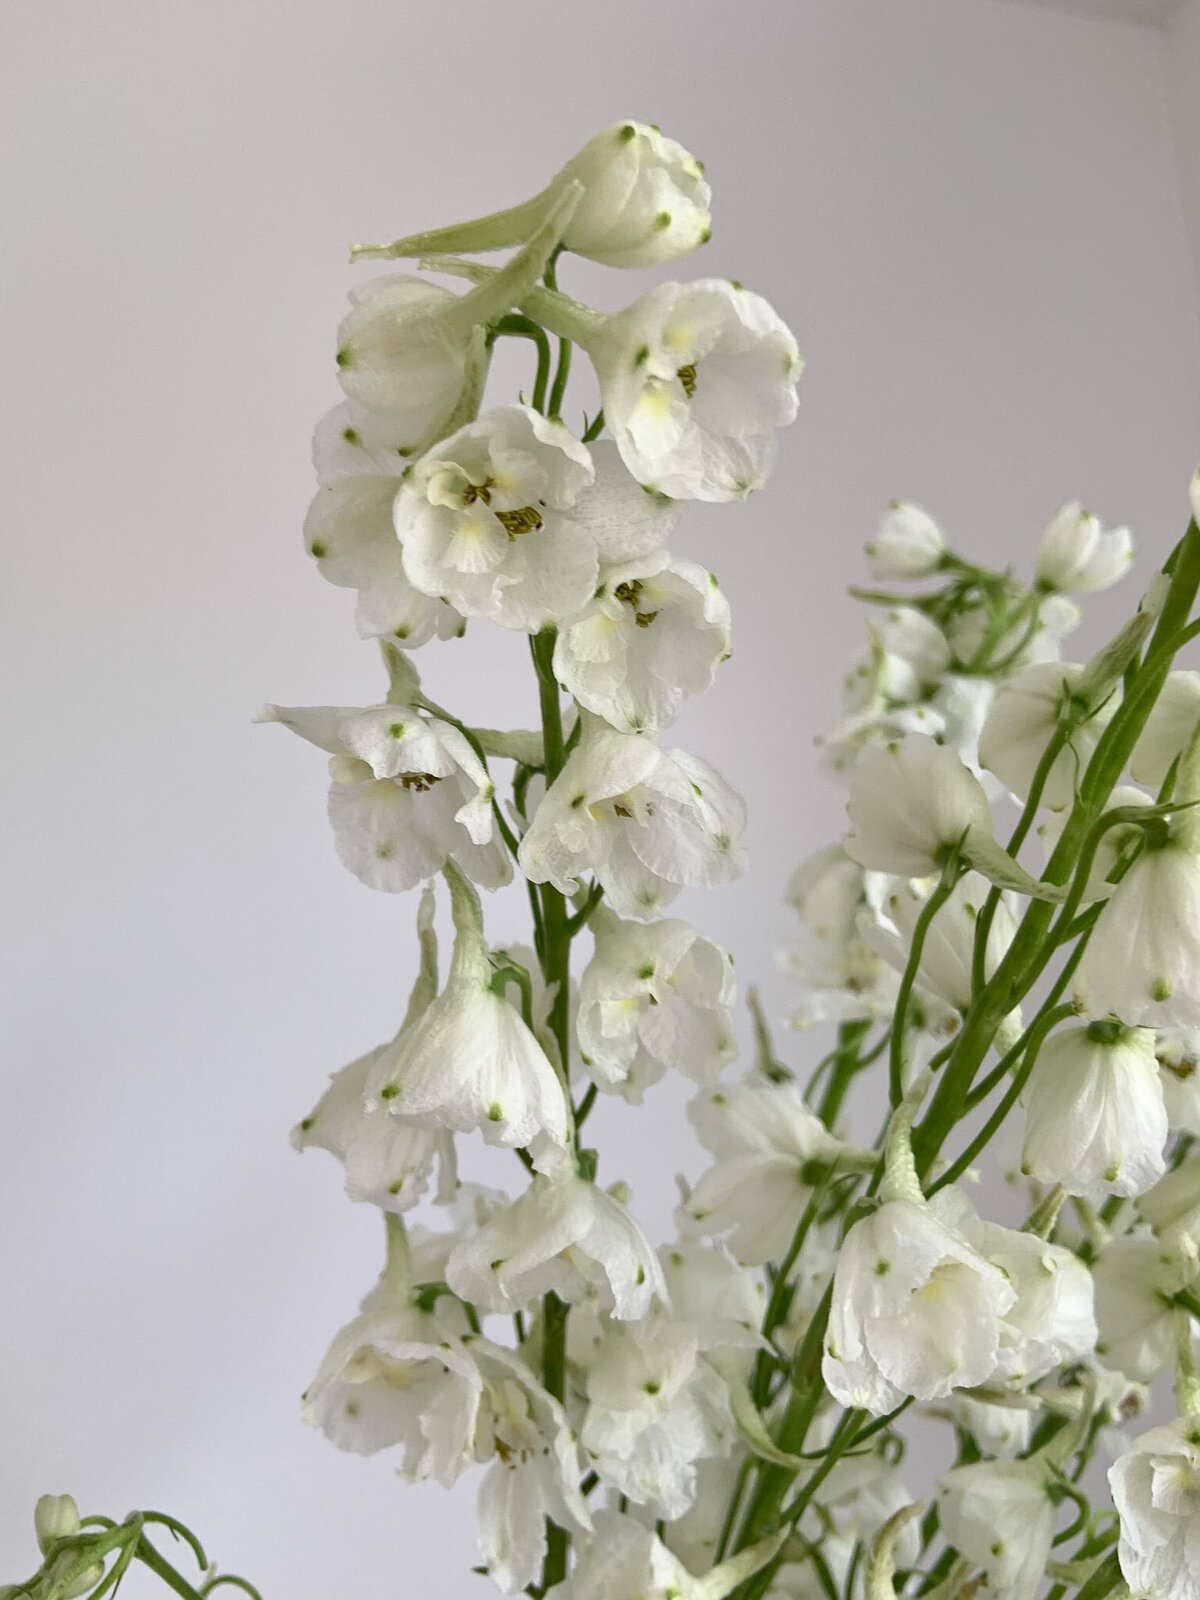 White delphinium is a great flower for wedding floral arrangements.